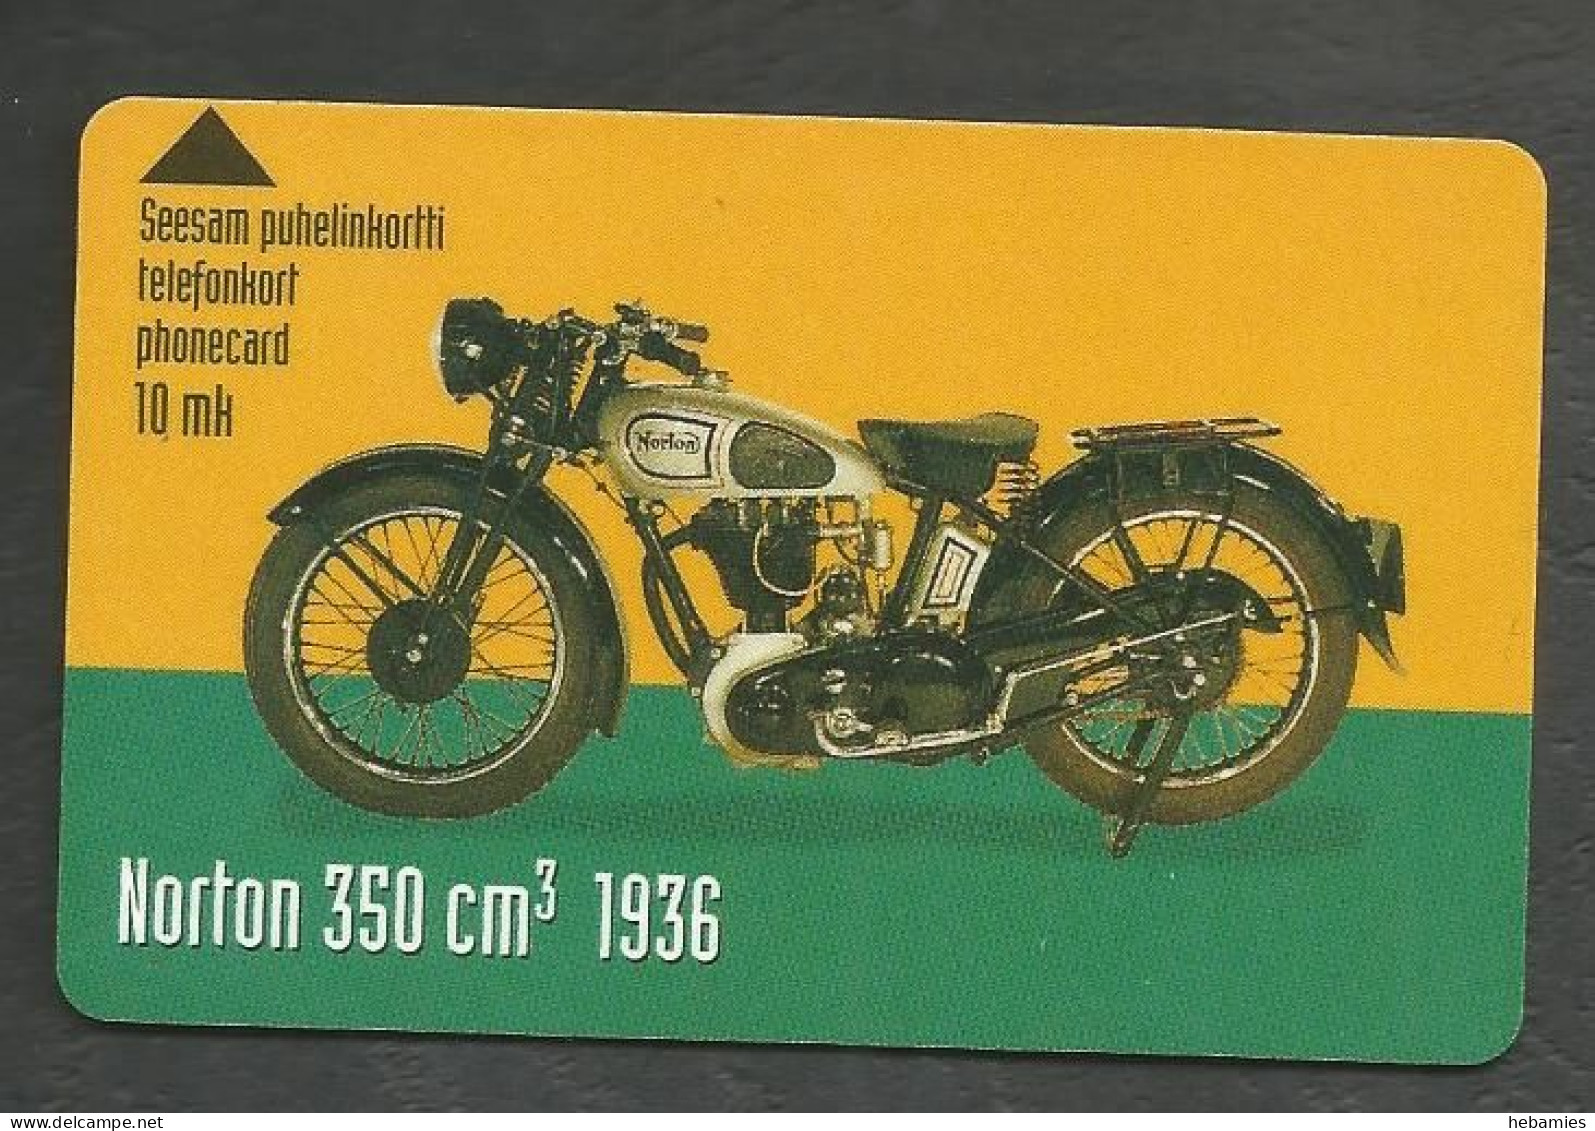 NORTON 350 Cm3 1936 - Magnetic Card -  10 FIM  FINNET - FINLAND - - Motorräder